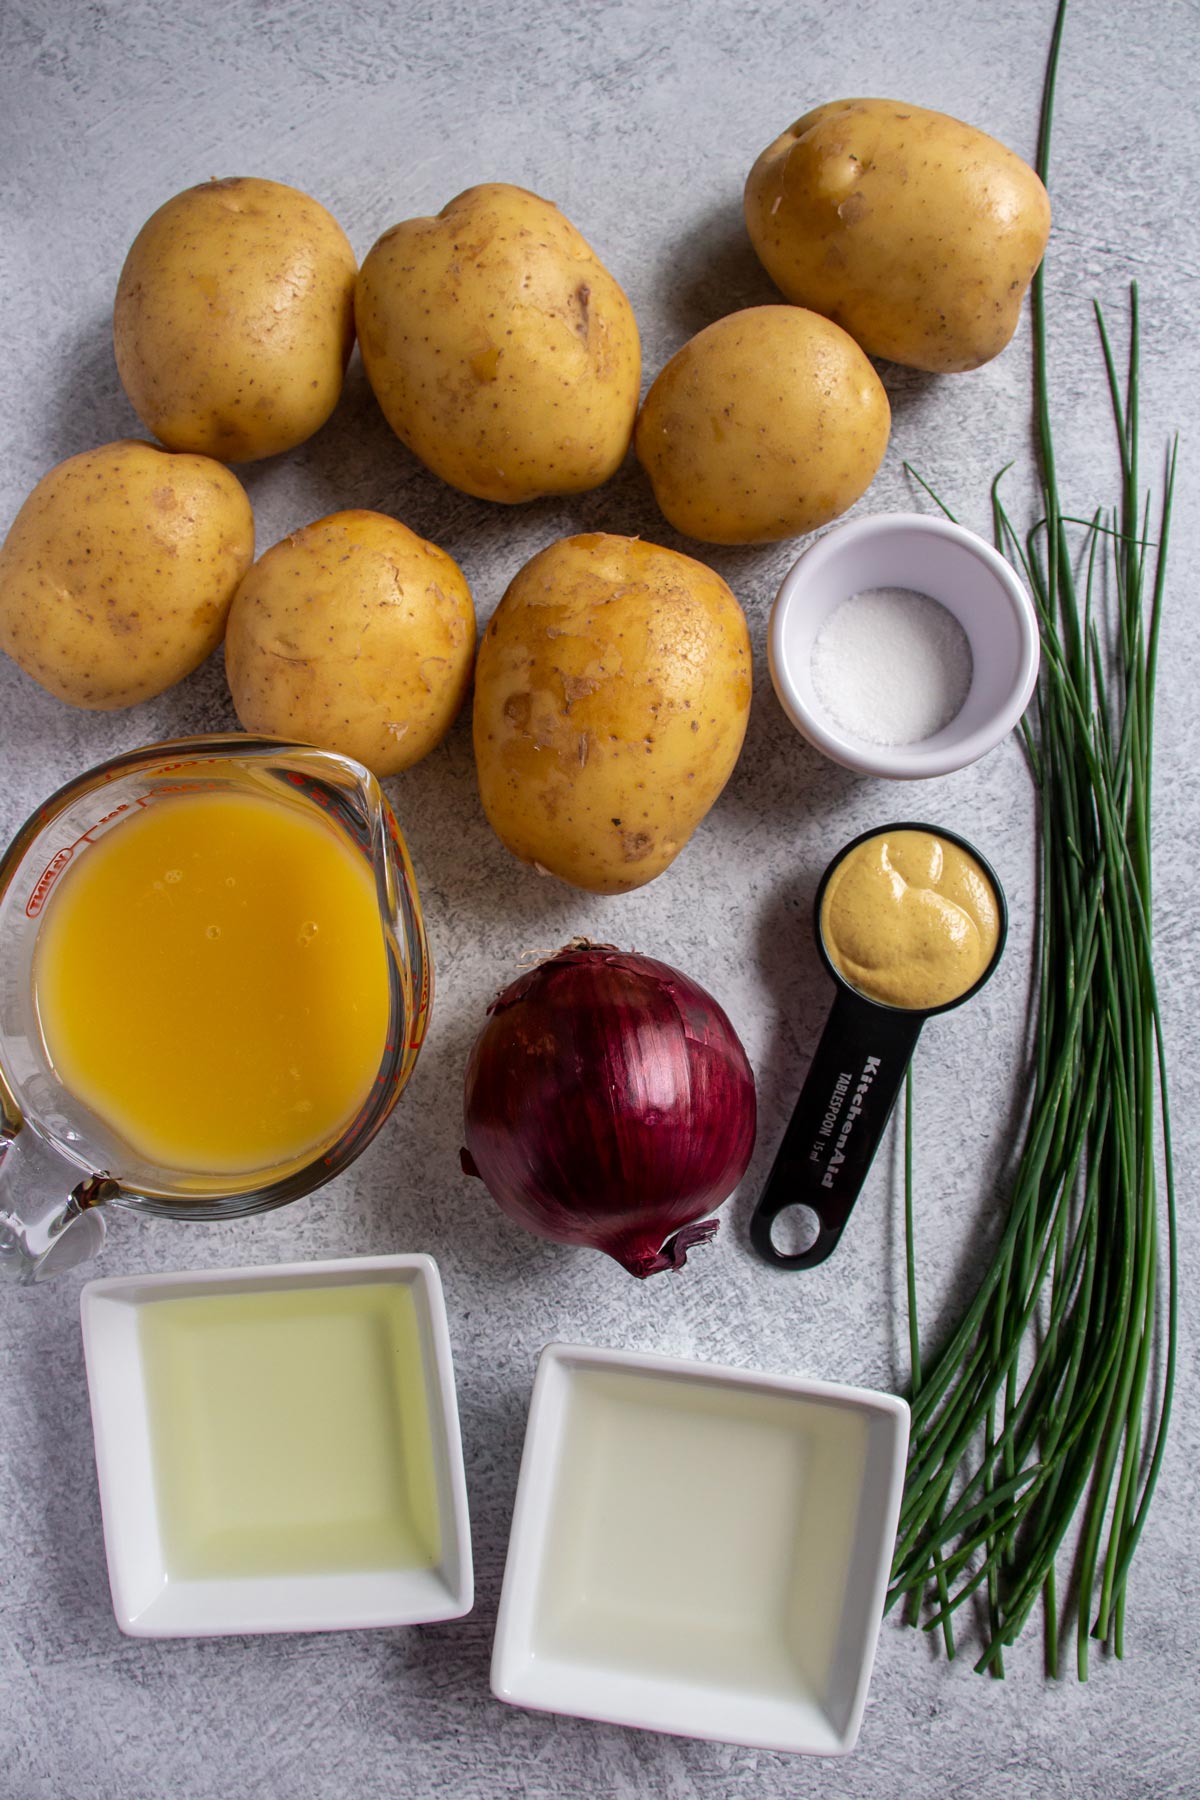 Ingredients for Austrian potato salad on a light grey background.